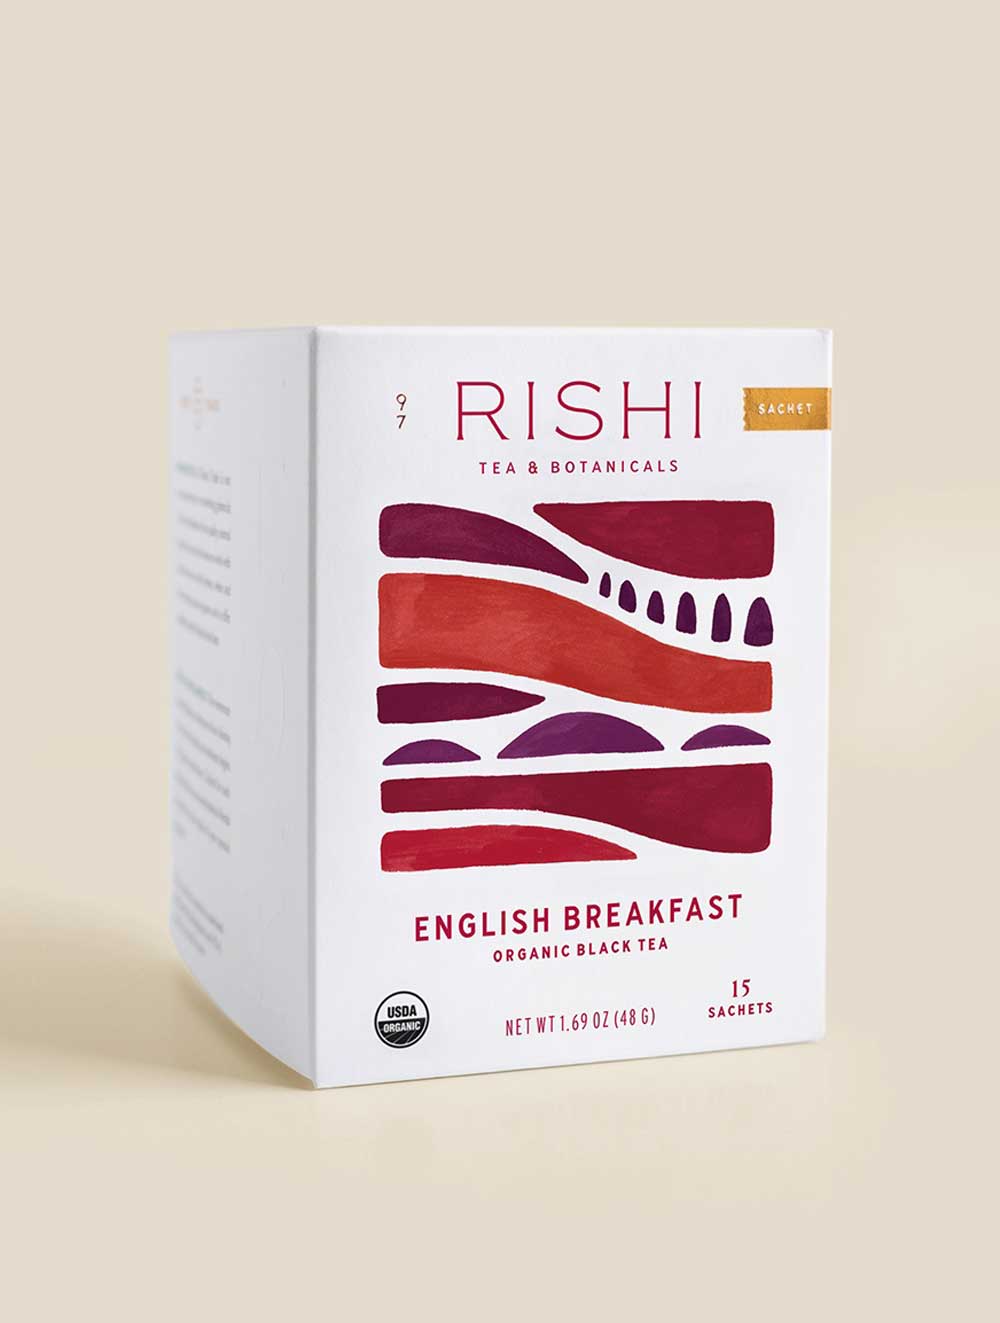 15 sachets of English Breakfast Tea by Rishi